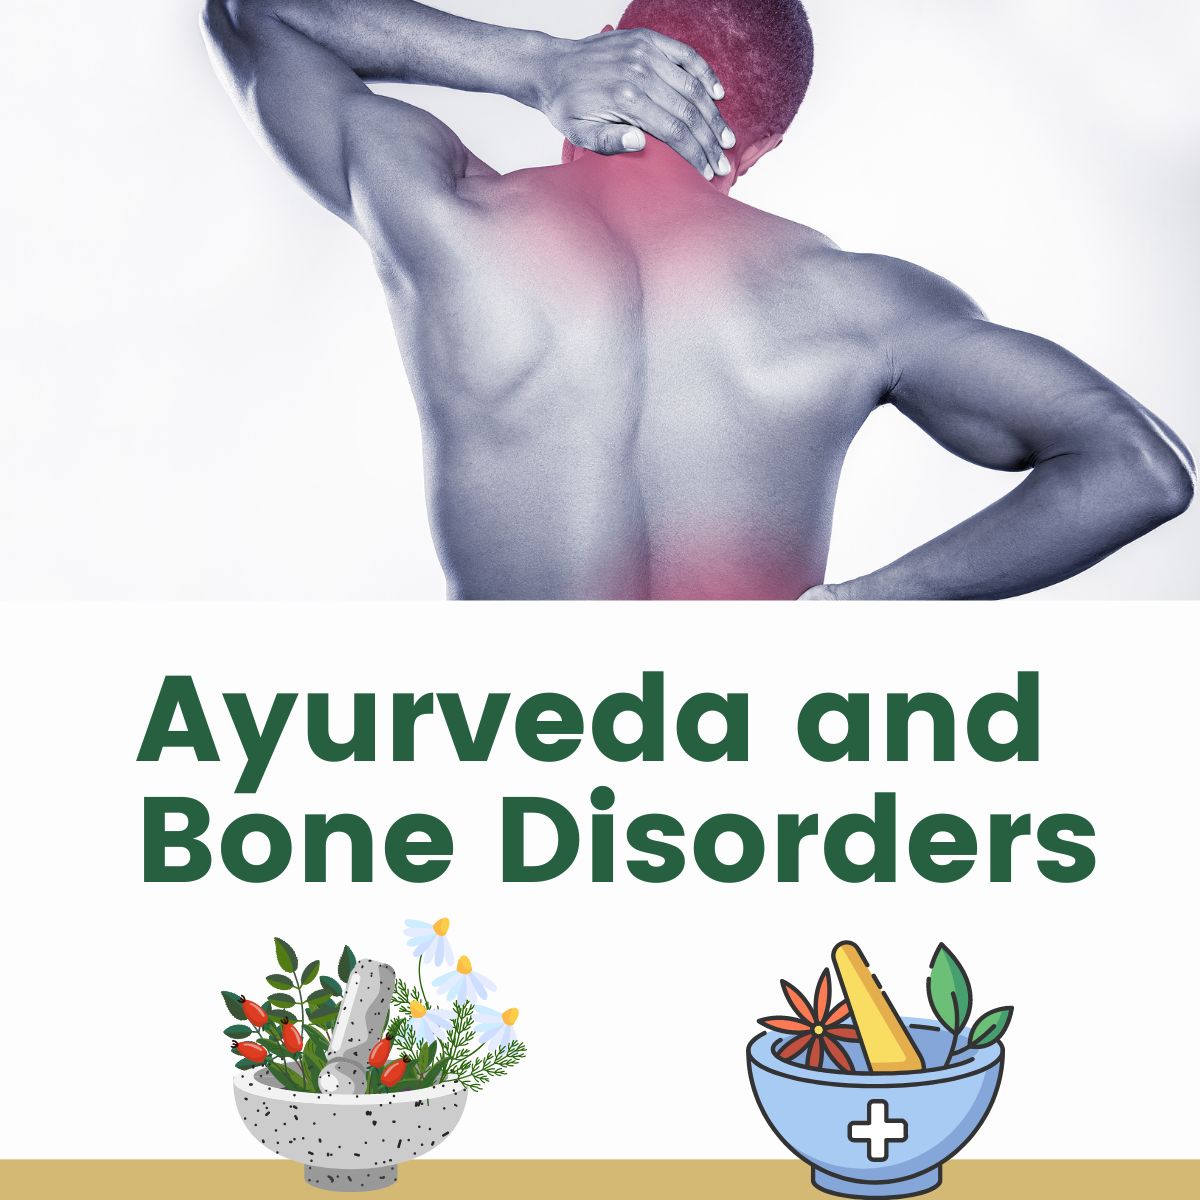 How Does Ayurveda Treat Bone Disorders